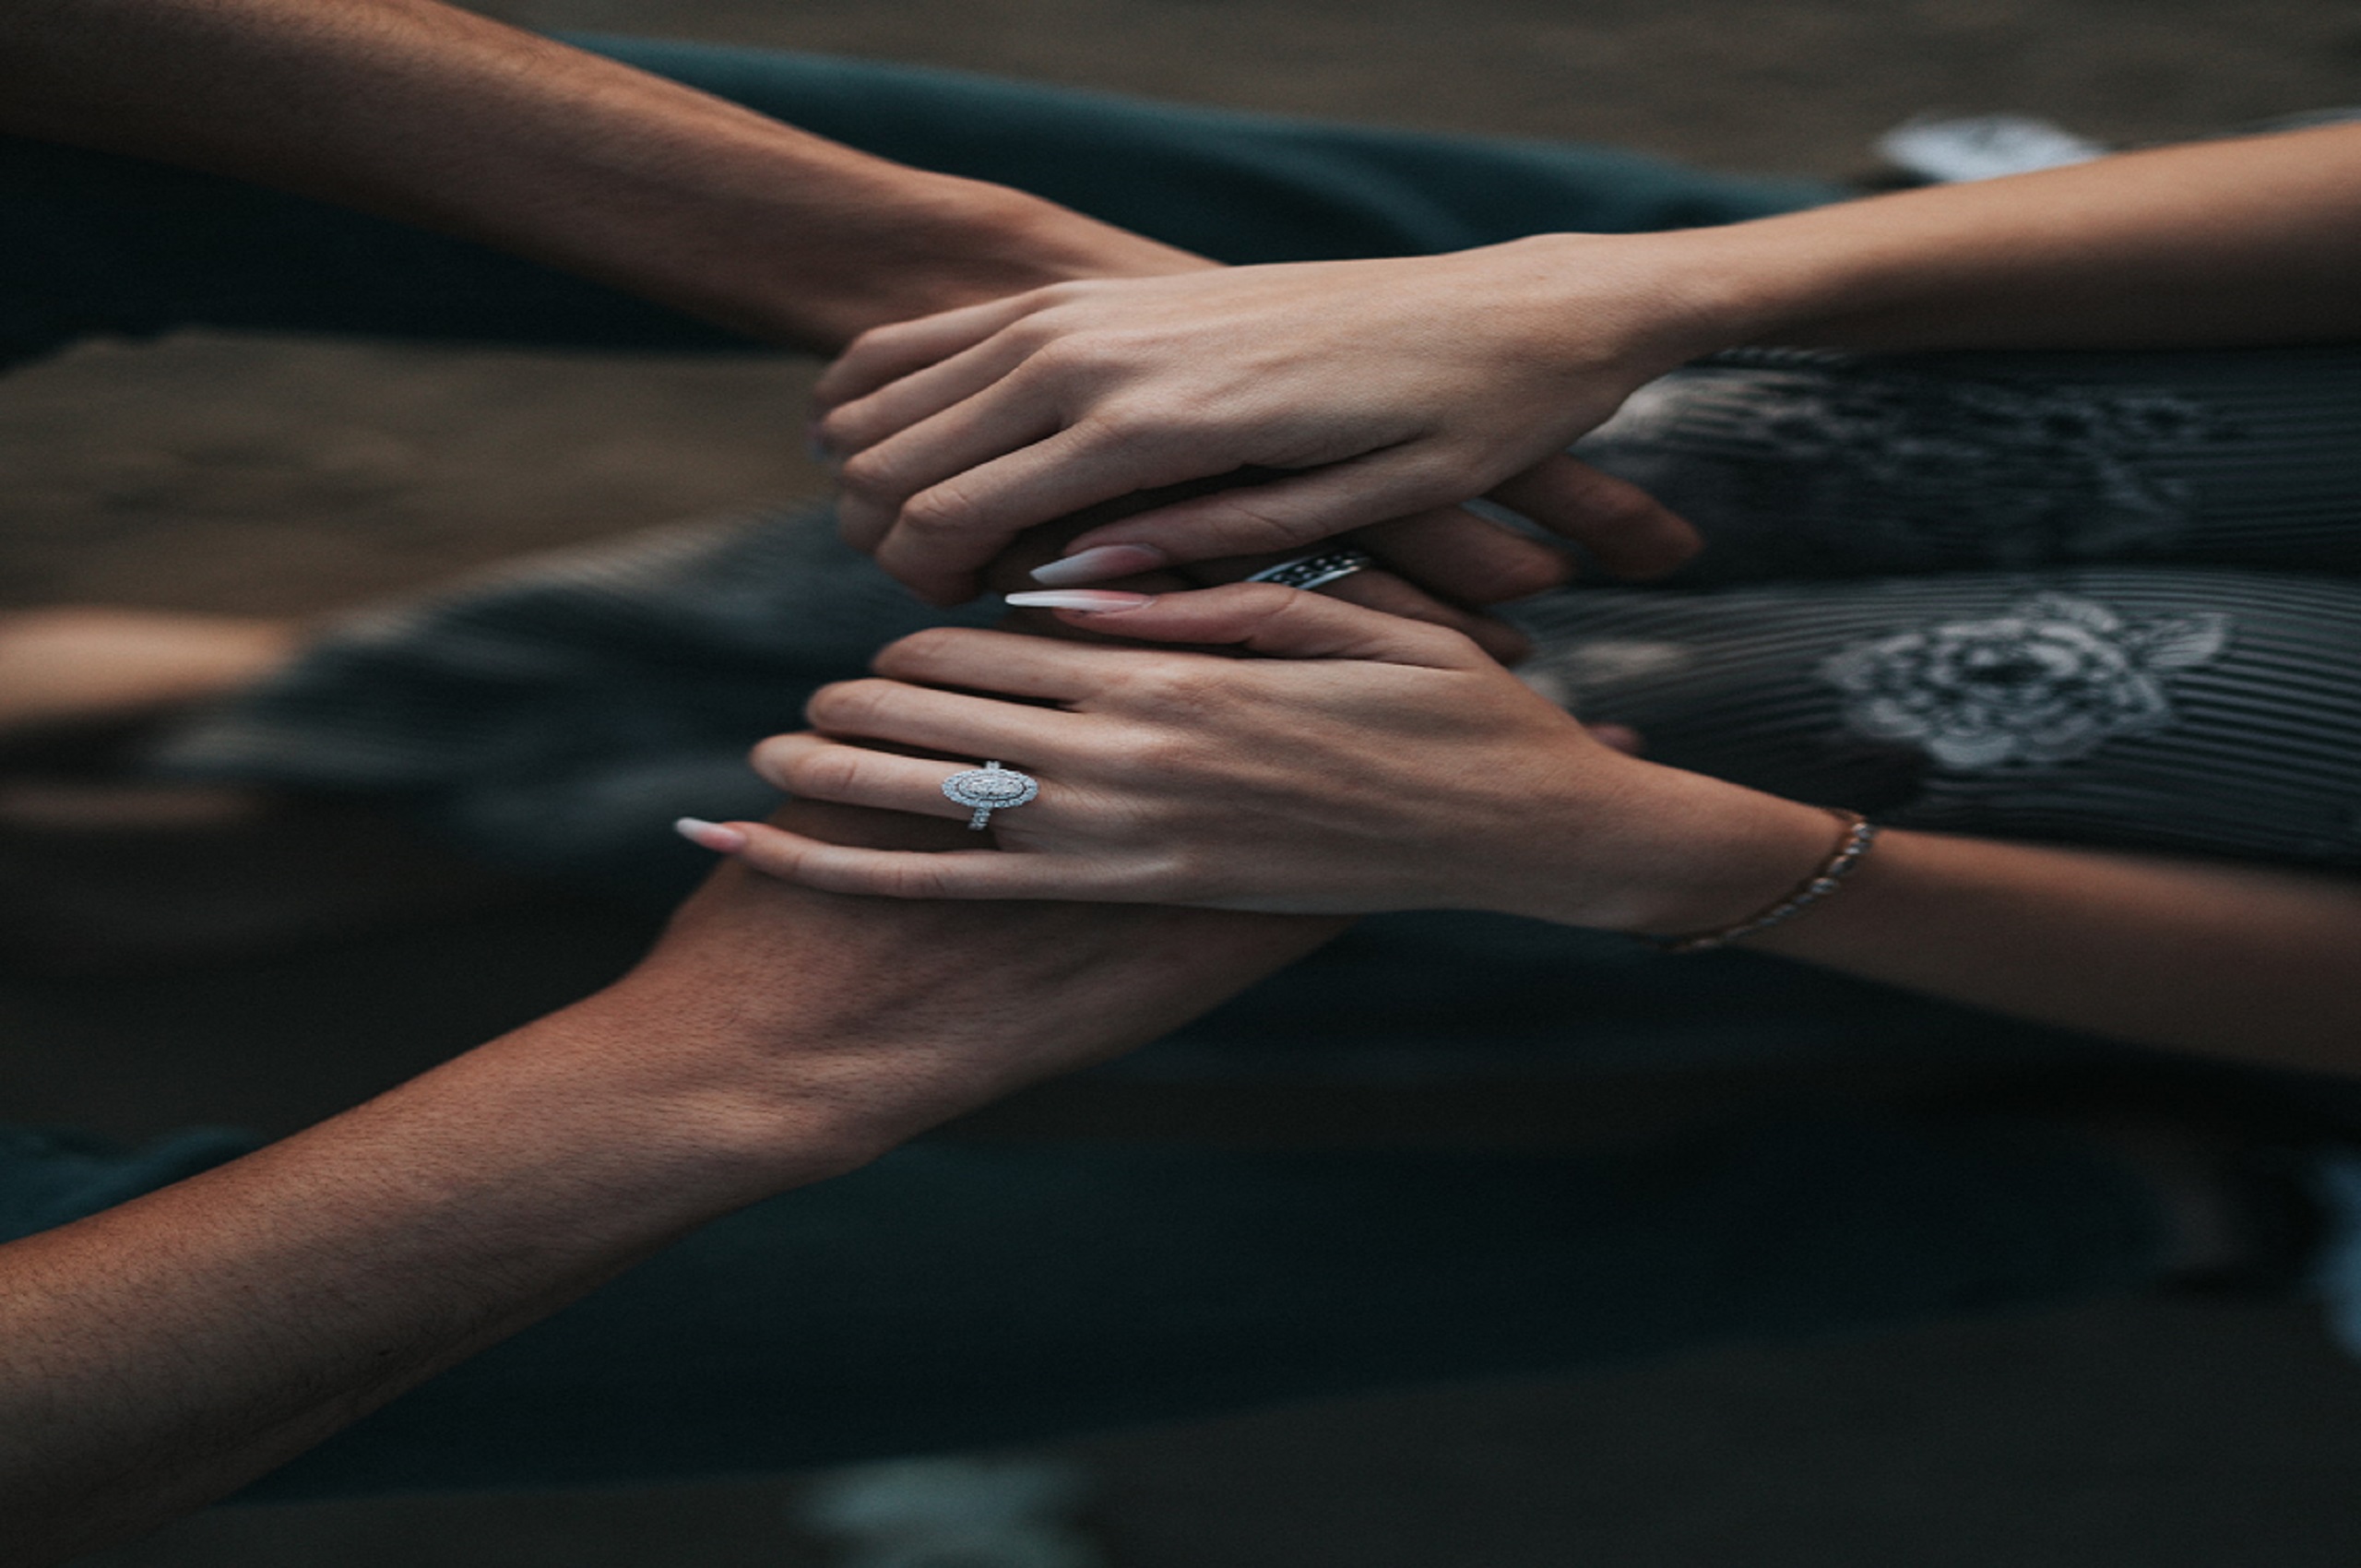 man and woman handing hands wearing wedding rings